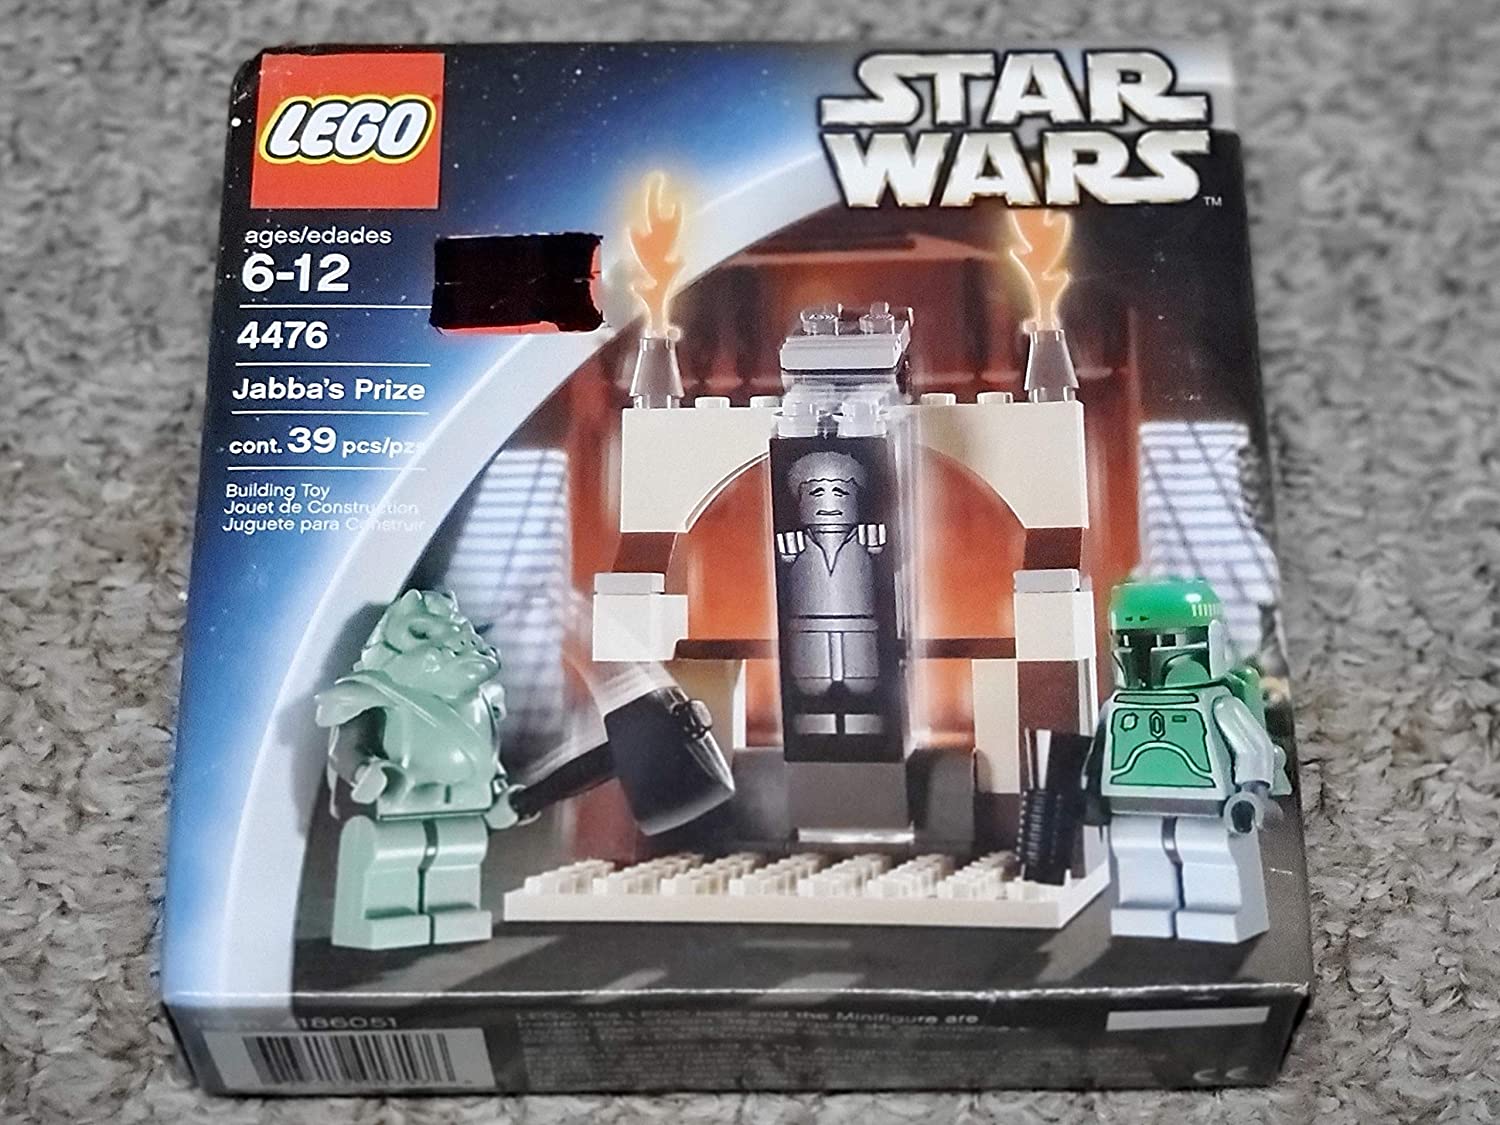 LEGO 4476 - Star Wars Jabbas Prize : Amazon.co.uk: Toys & Games